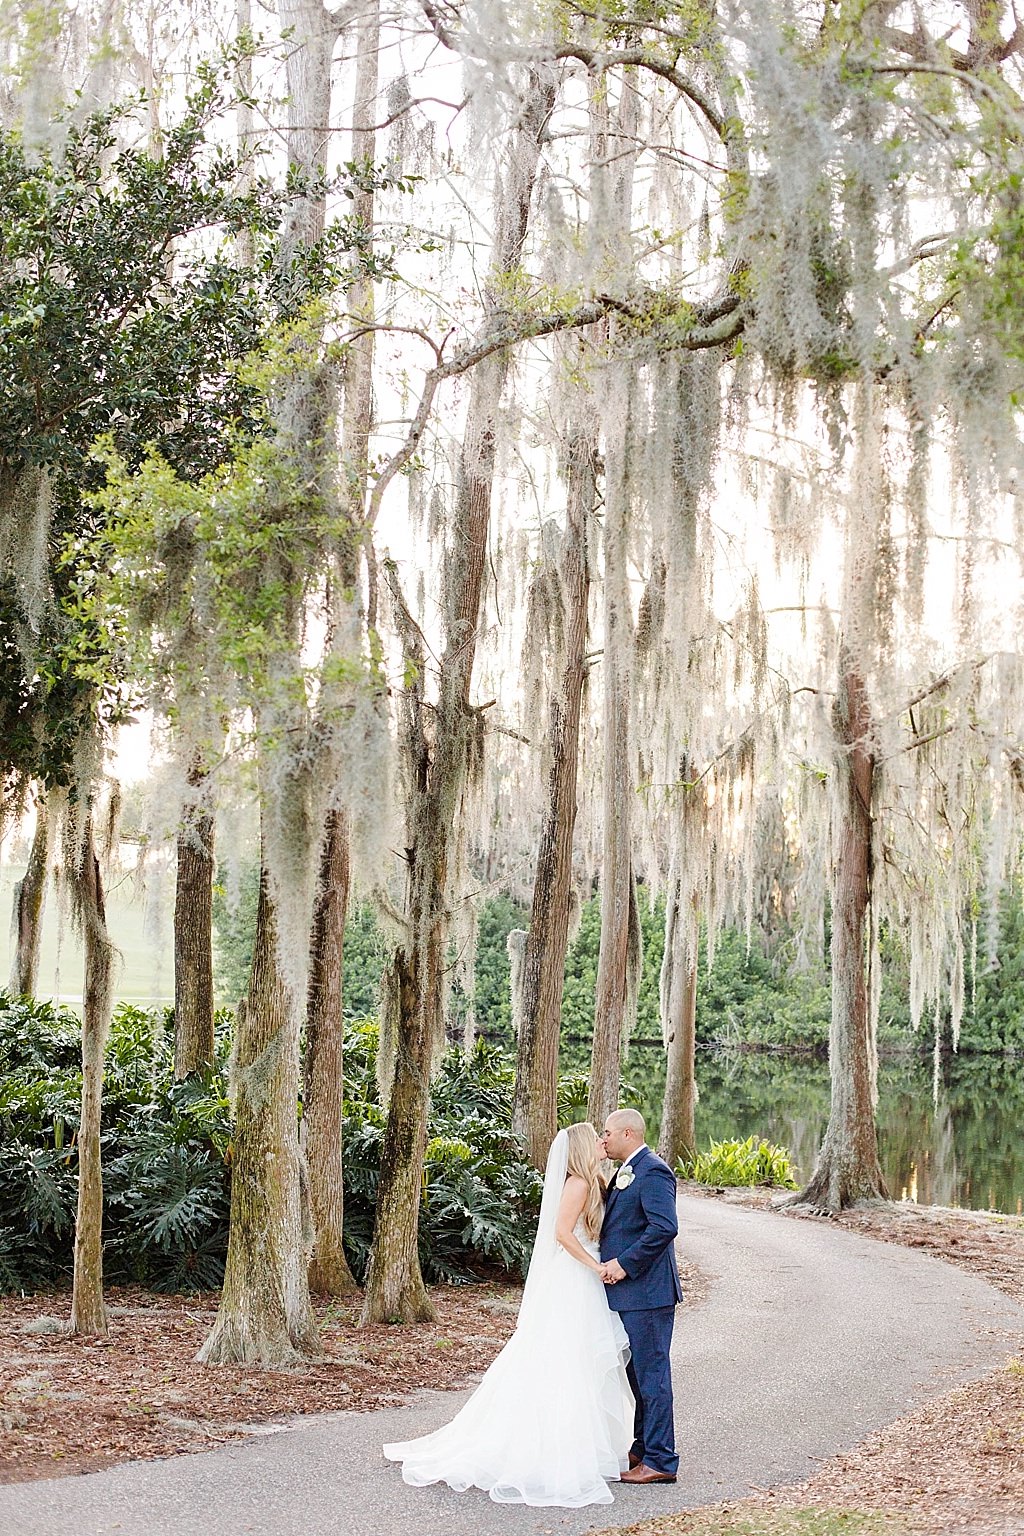 Florida Bride and Groom Intimate Romantic Outdoor Under Trees Wedding Portrait | Tampa Bay Wedding Venue Innisbrook Golf and Spa Resort